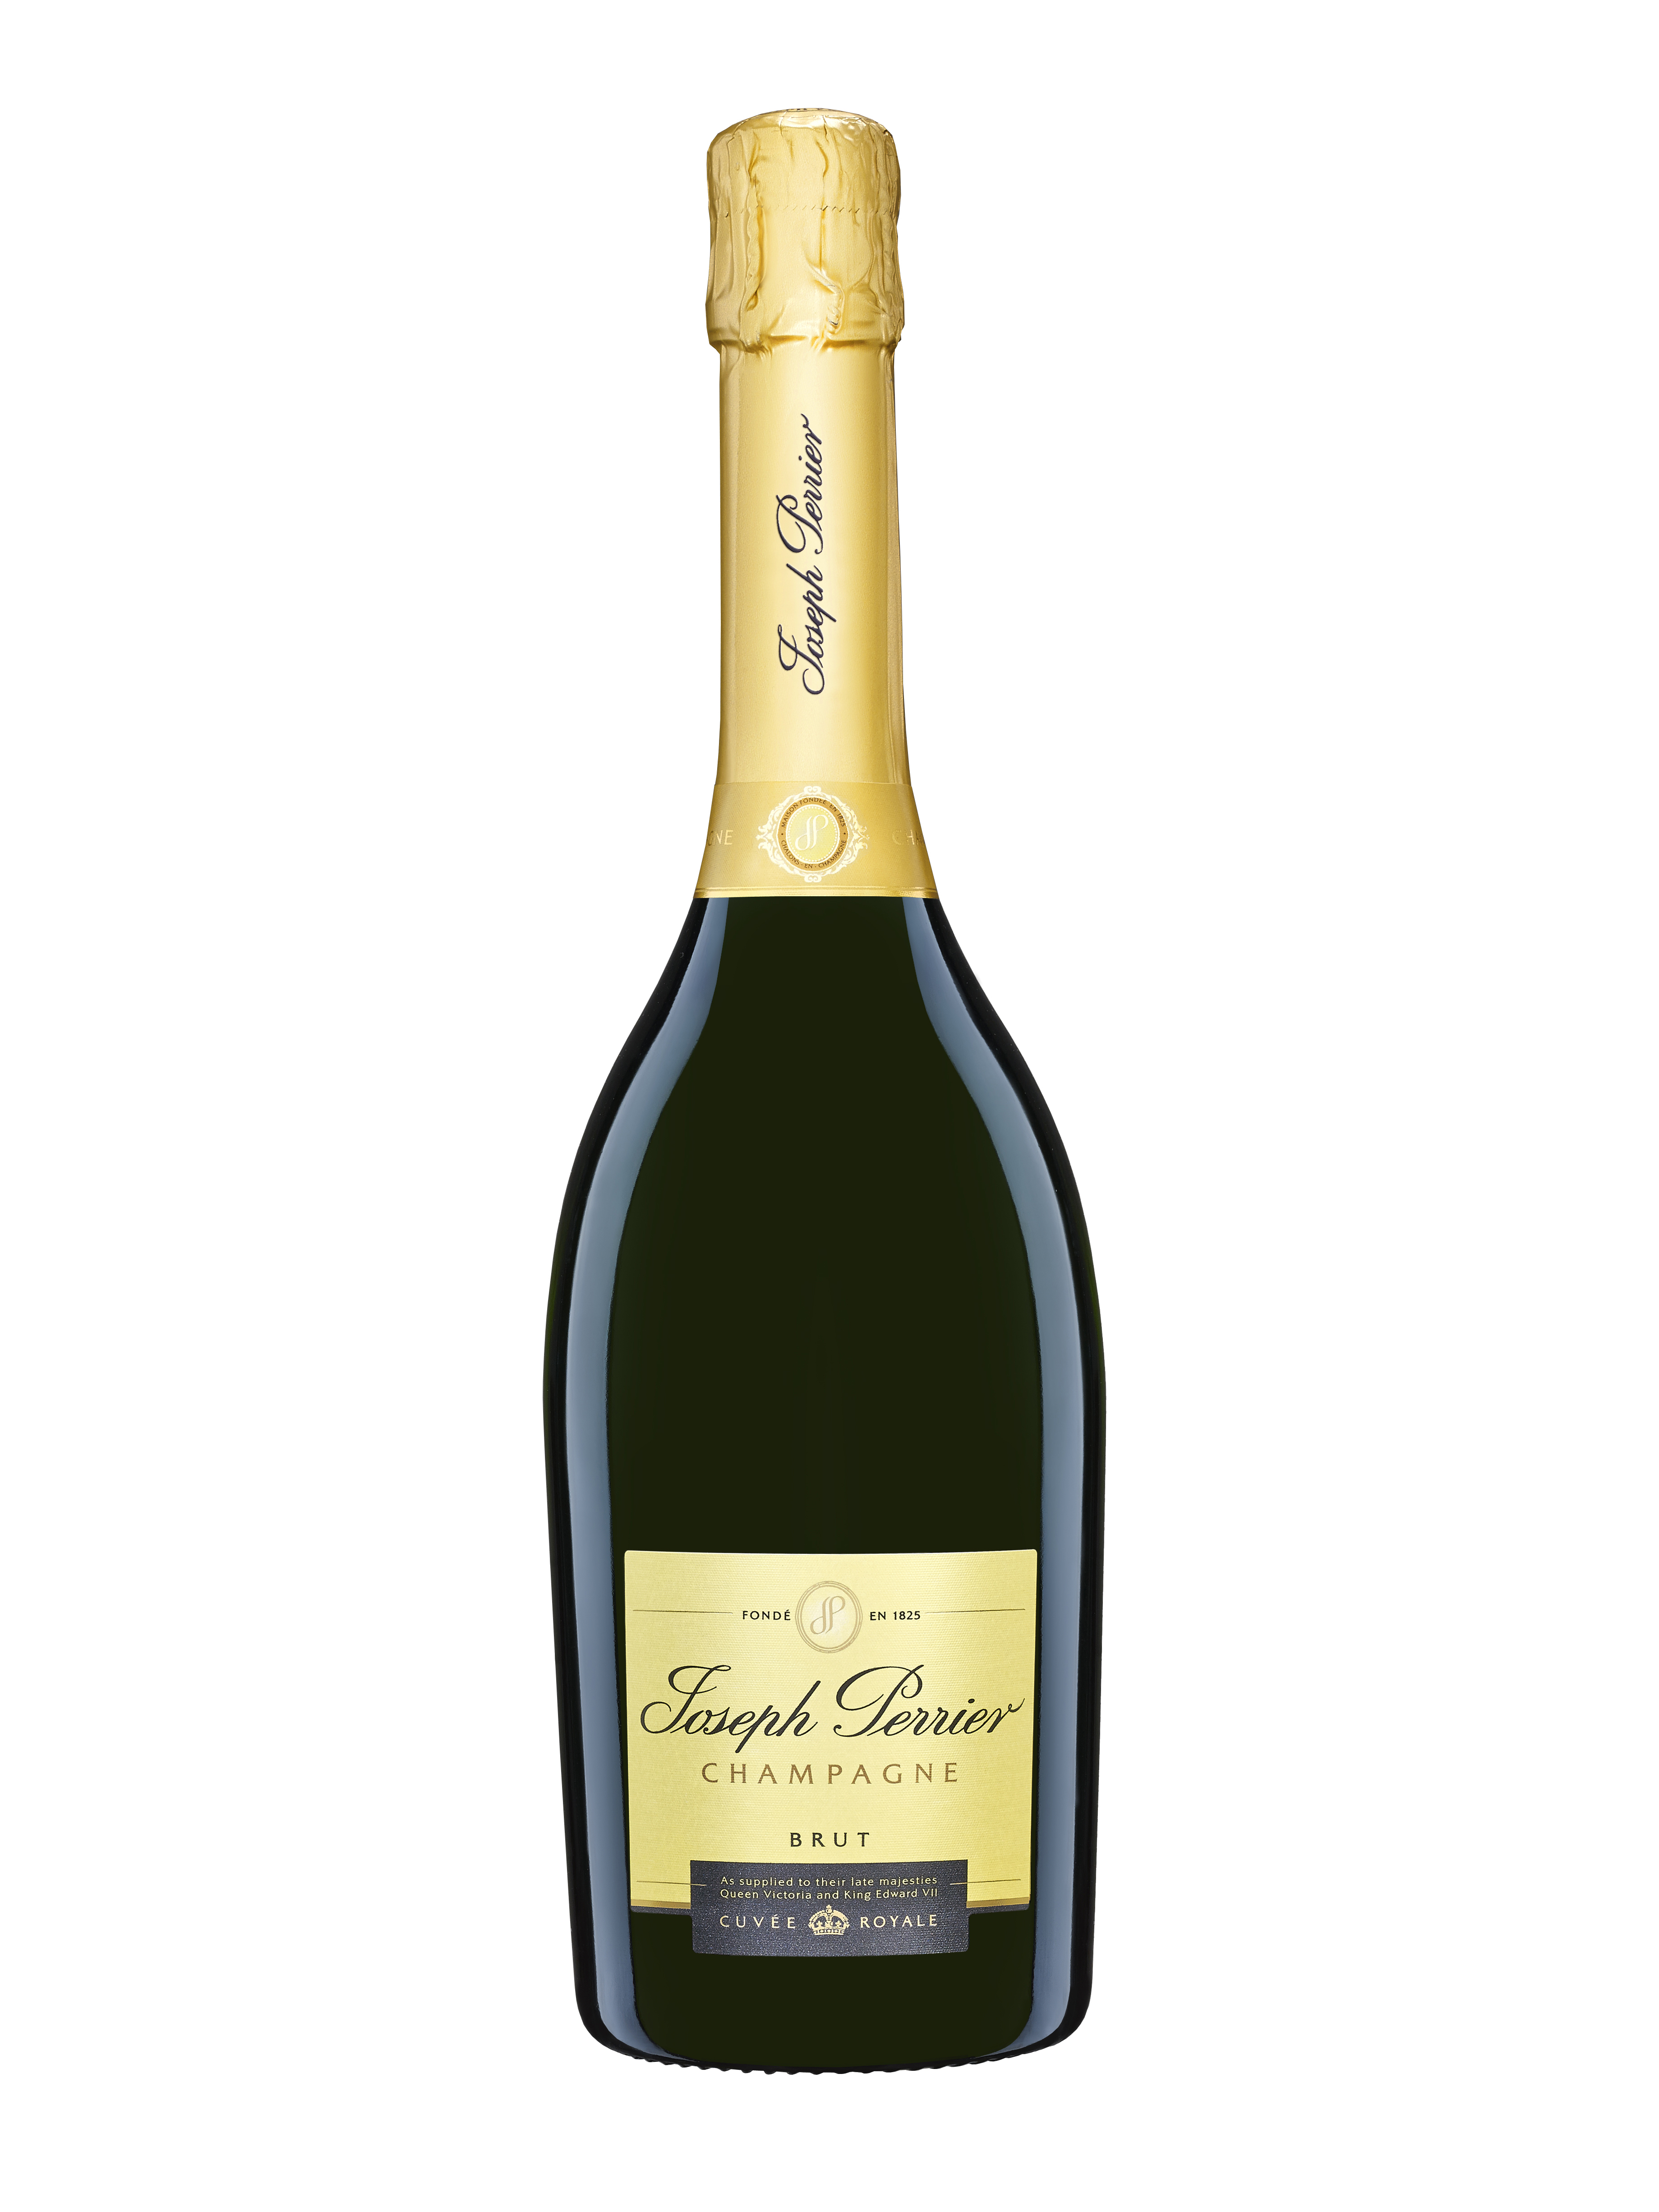 64607 Champagne Joseph Perrier cuvee royale 75cl